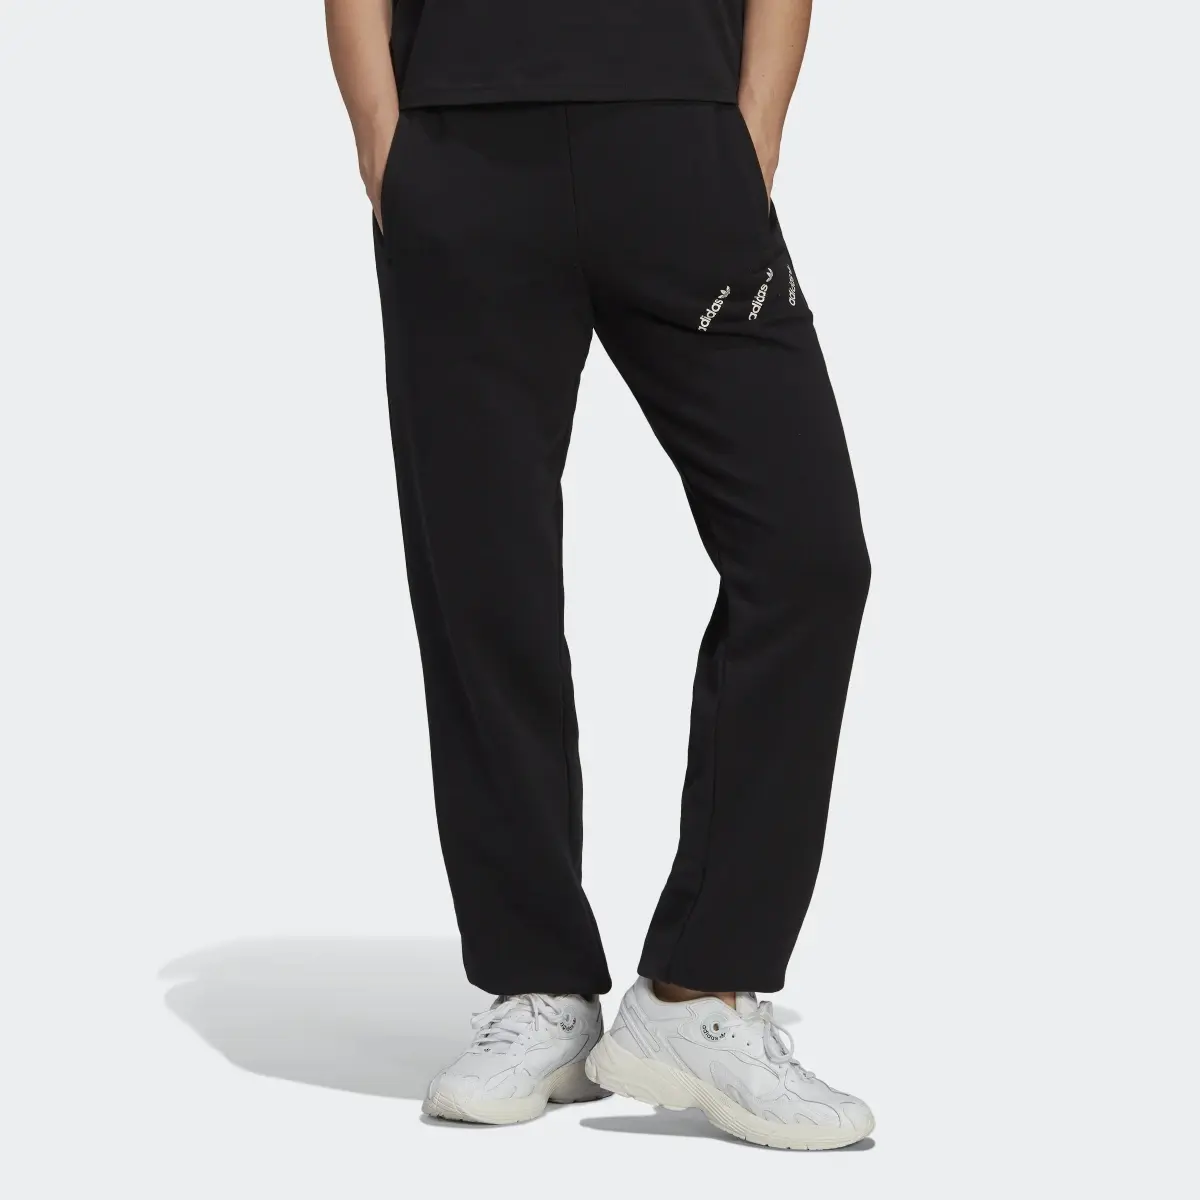 Adidas Track pants. 1